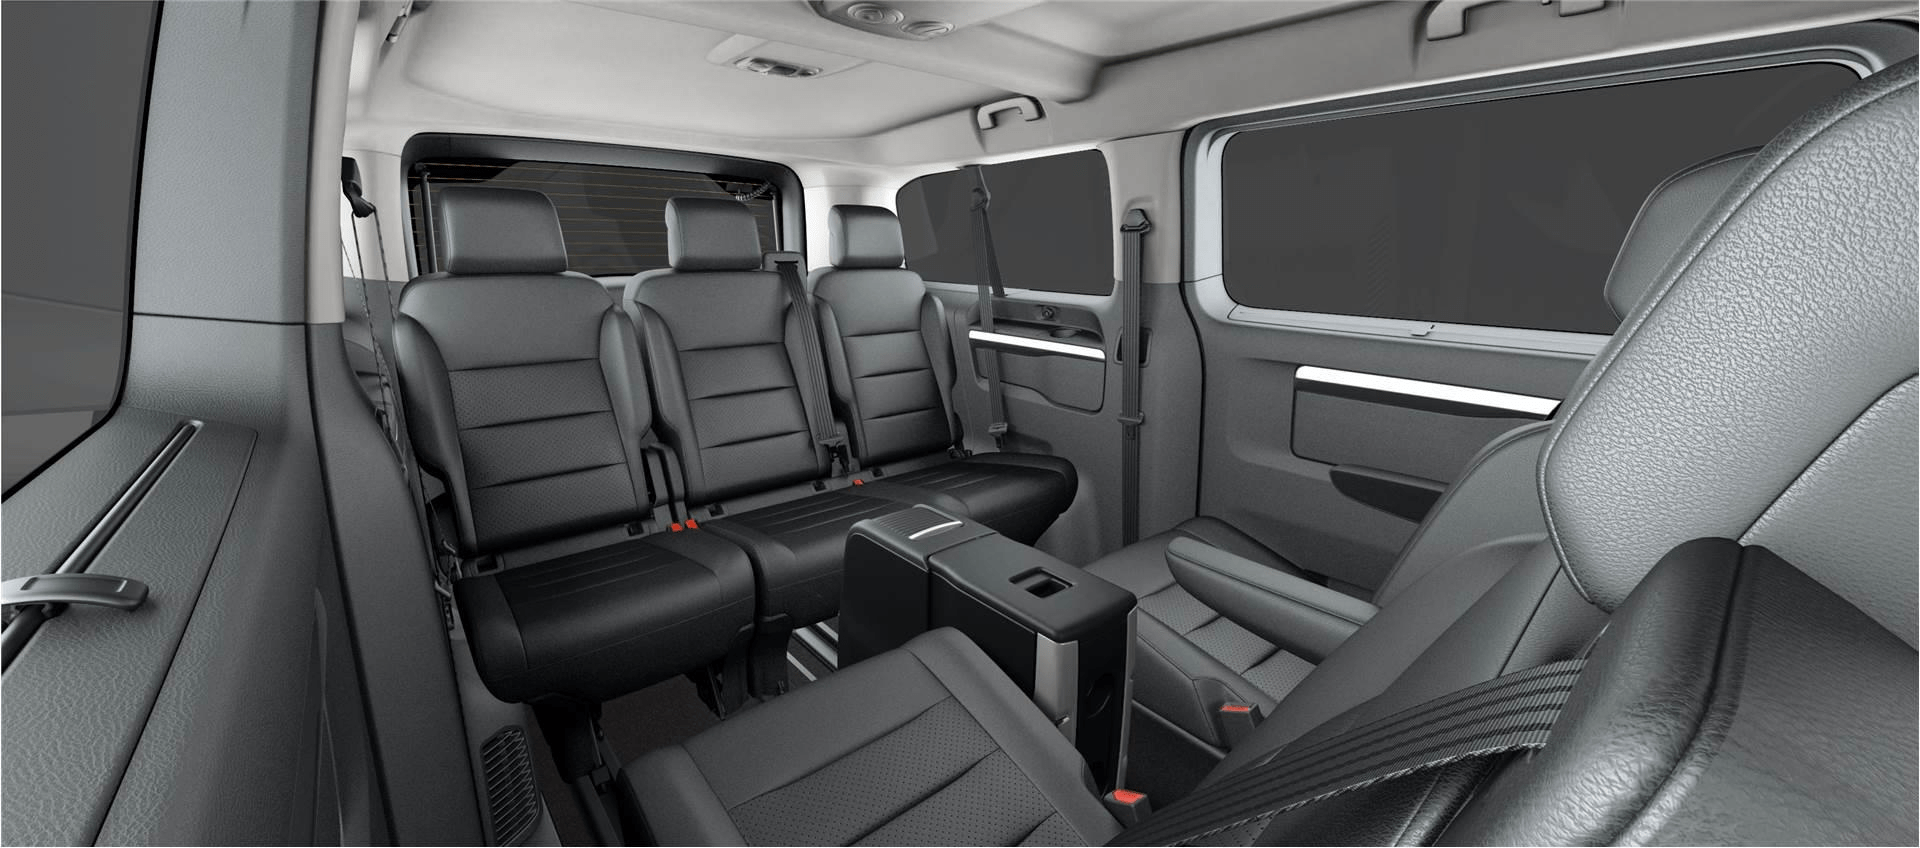 Toyota PROACE VERSO VIP Long wheel base Passenger 5 doors | Features & specs